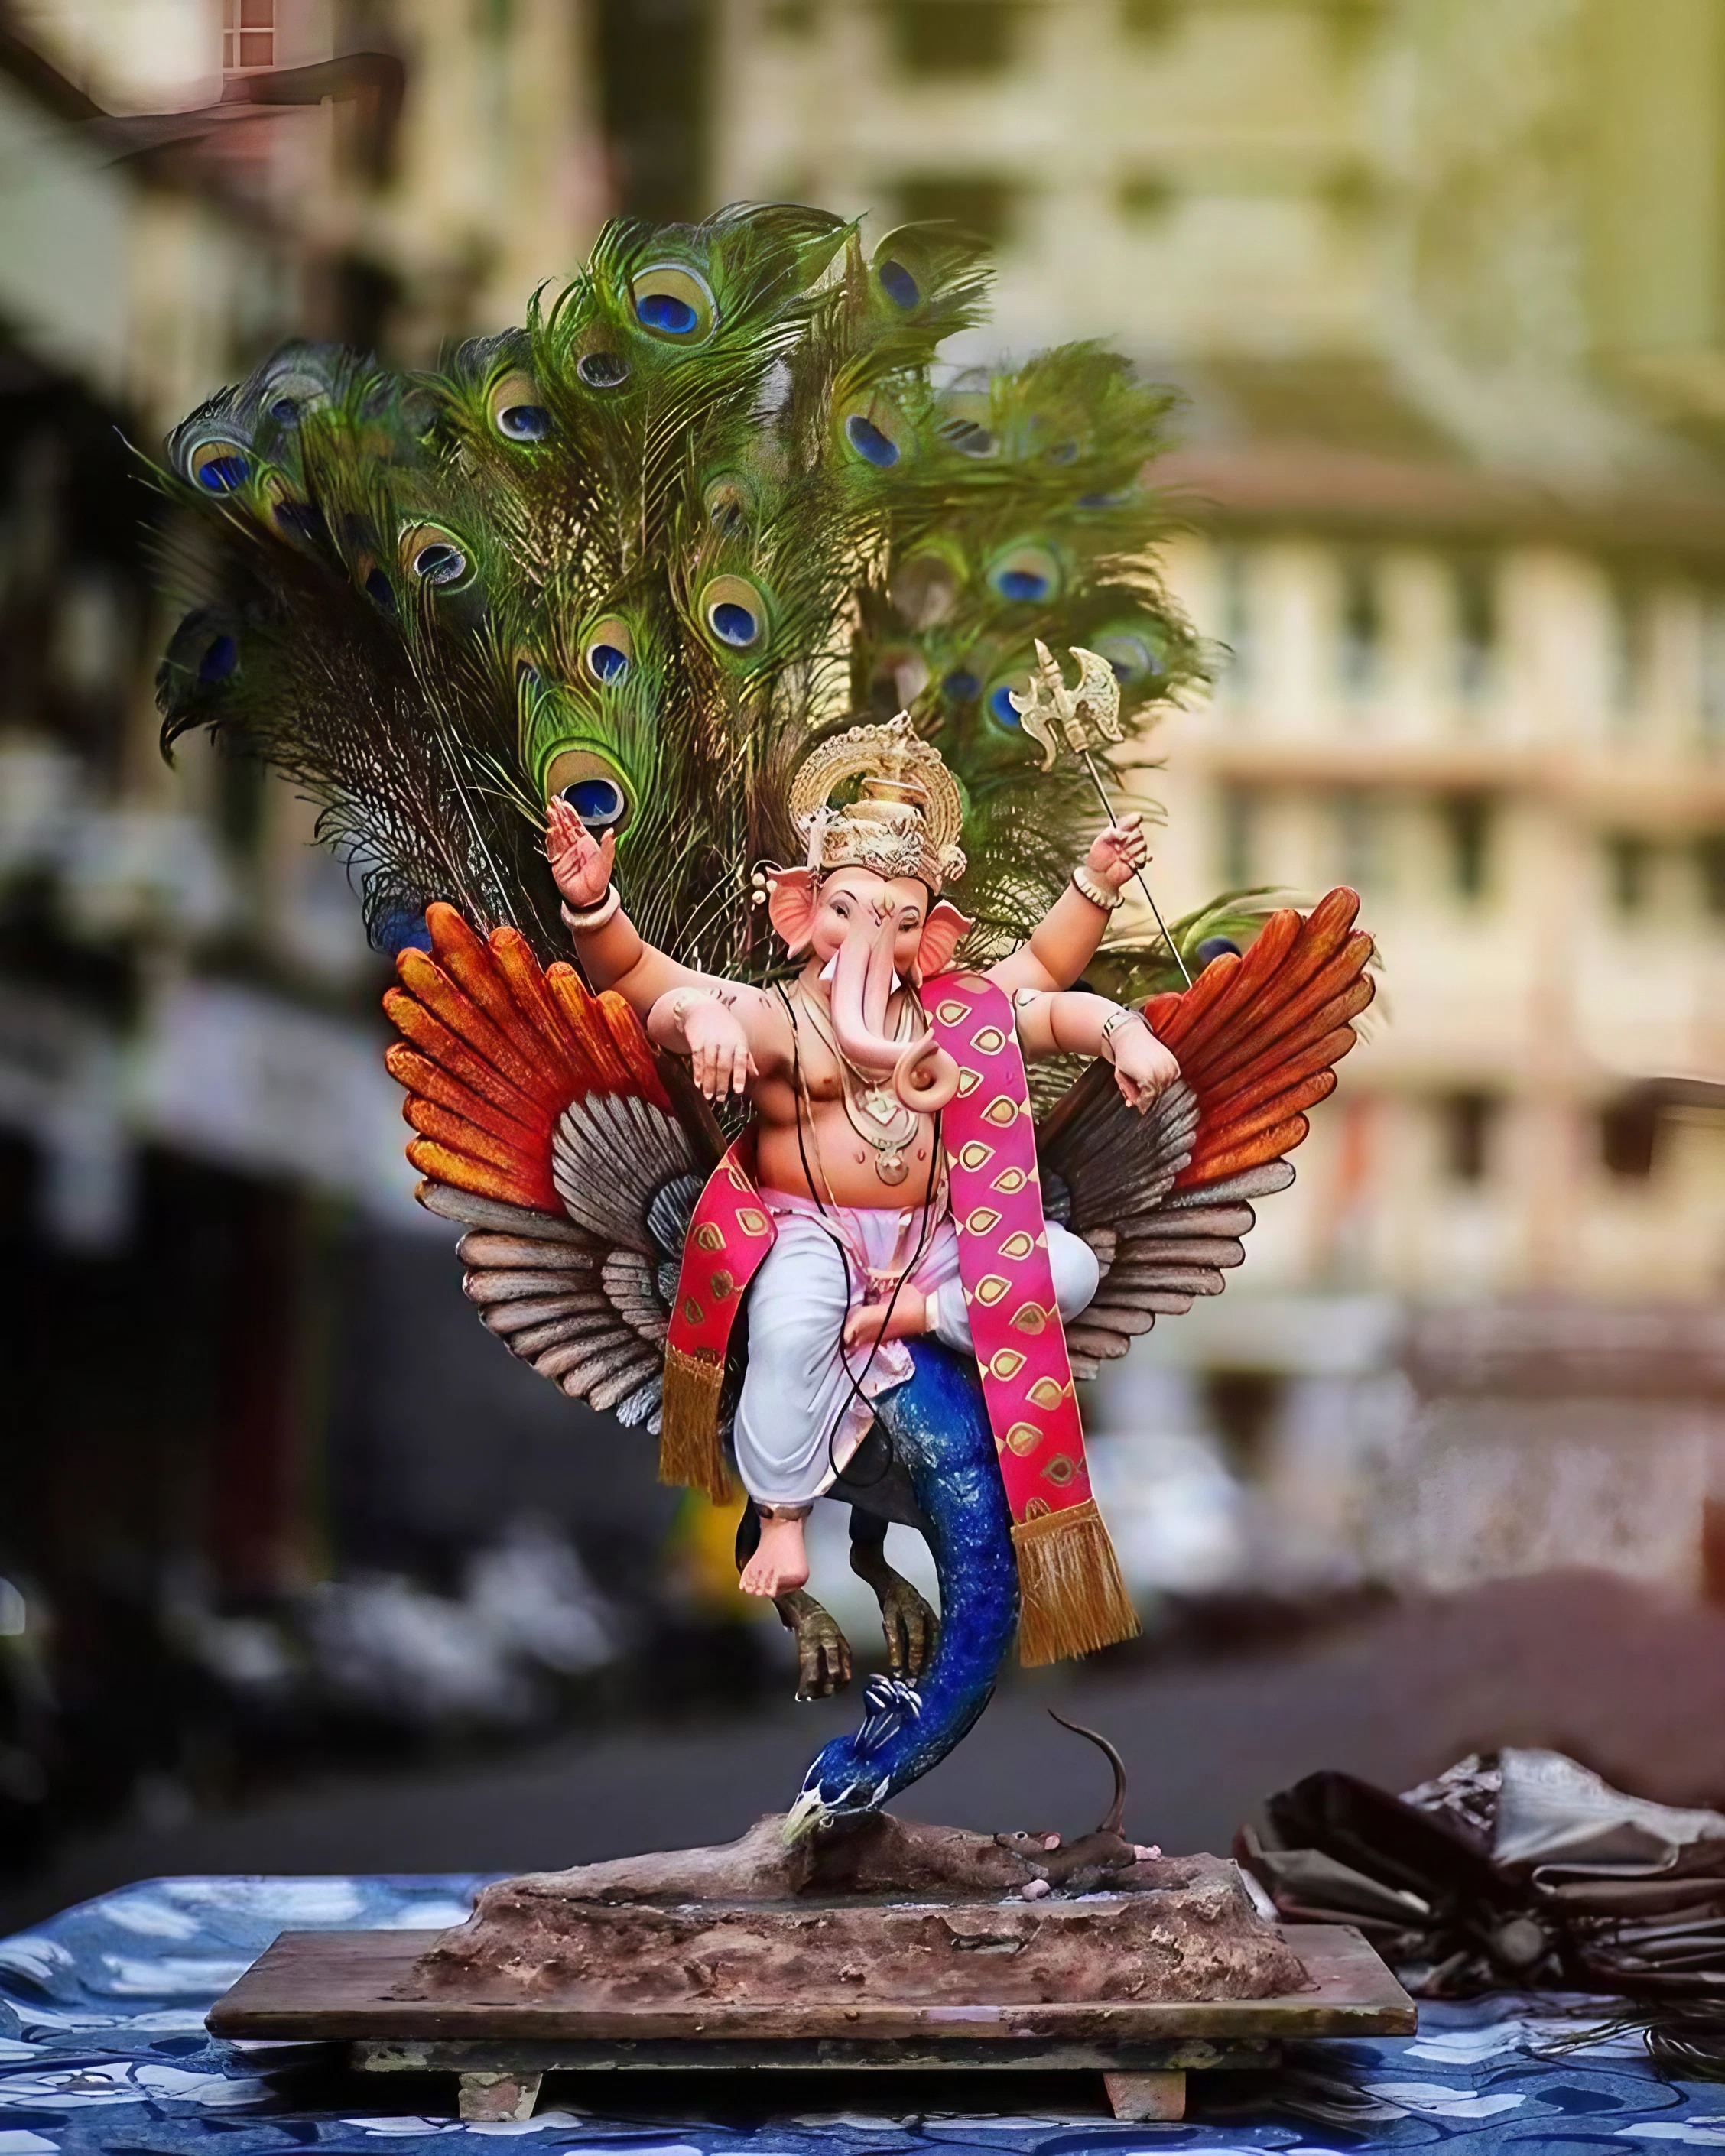 Vighnaharta Shree Ganesh - Shree Ganesh with peacock